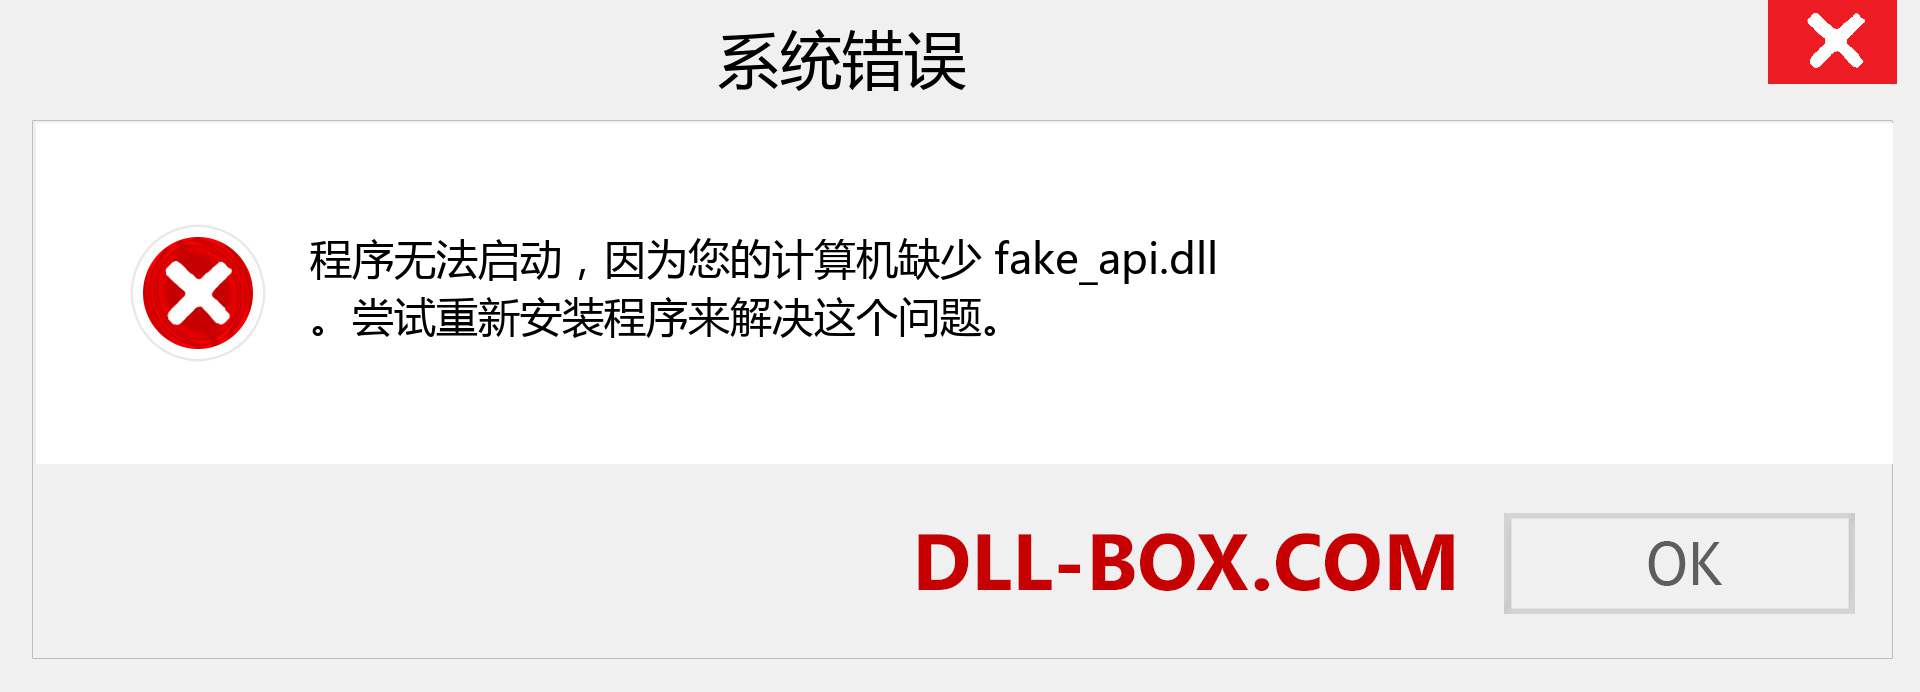 fake_api.dll 文件丢失？。 适用于 Windows 7、8、10 的下载 - 修复 Windows、照片、图像上的 fake_api dll 丢失错误